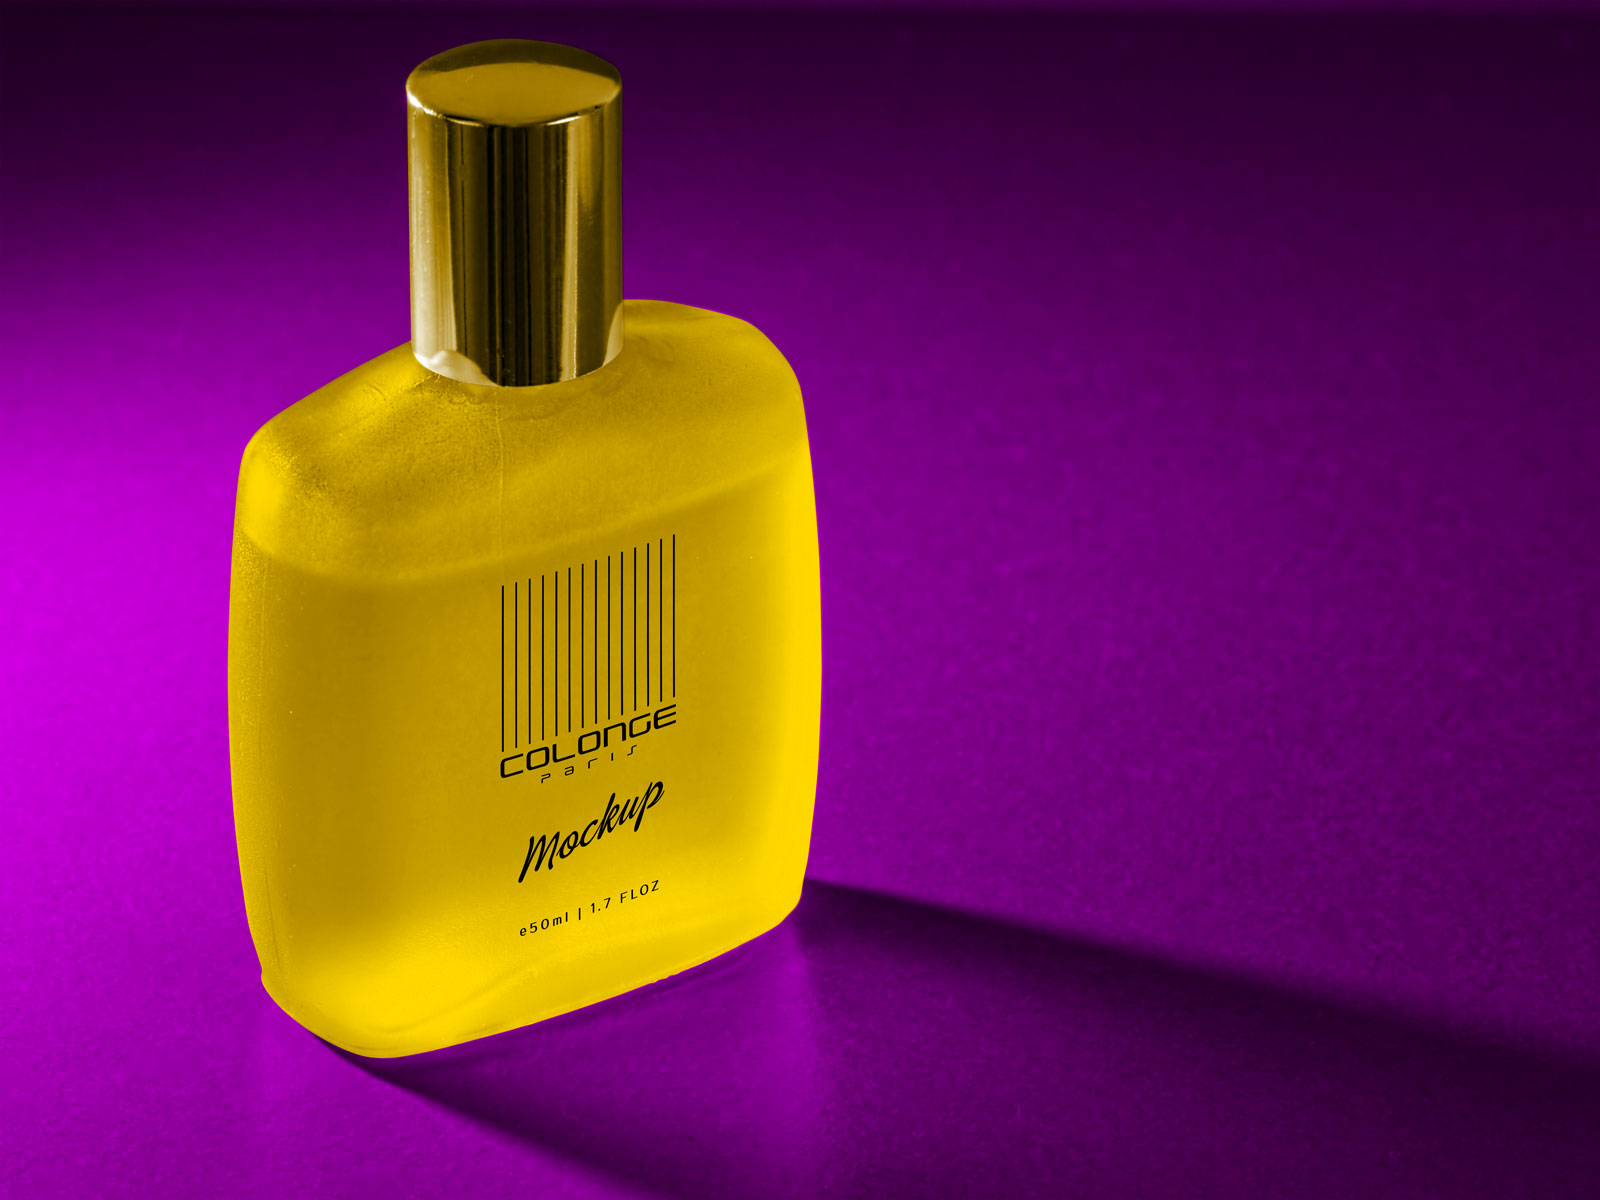 Download Free Frosted Cologne / Perfume Bottle Mockup PSD | Designbolts